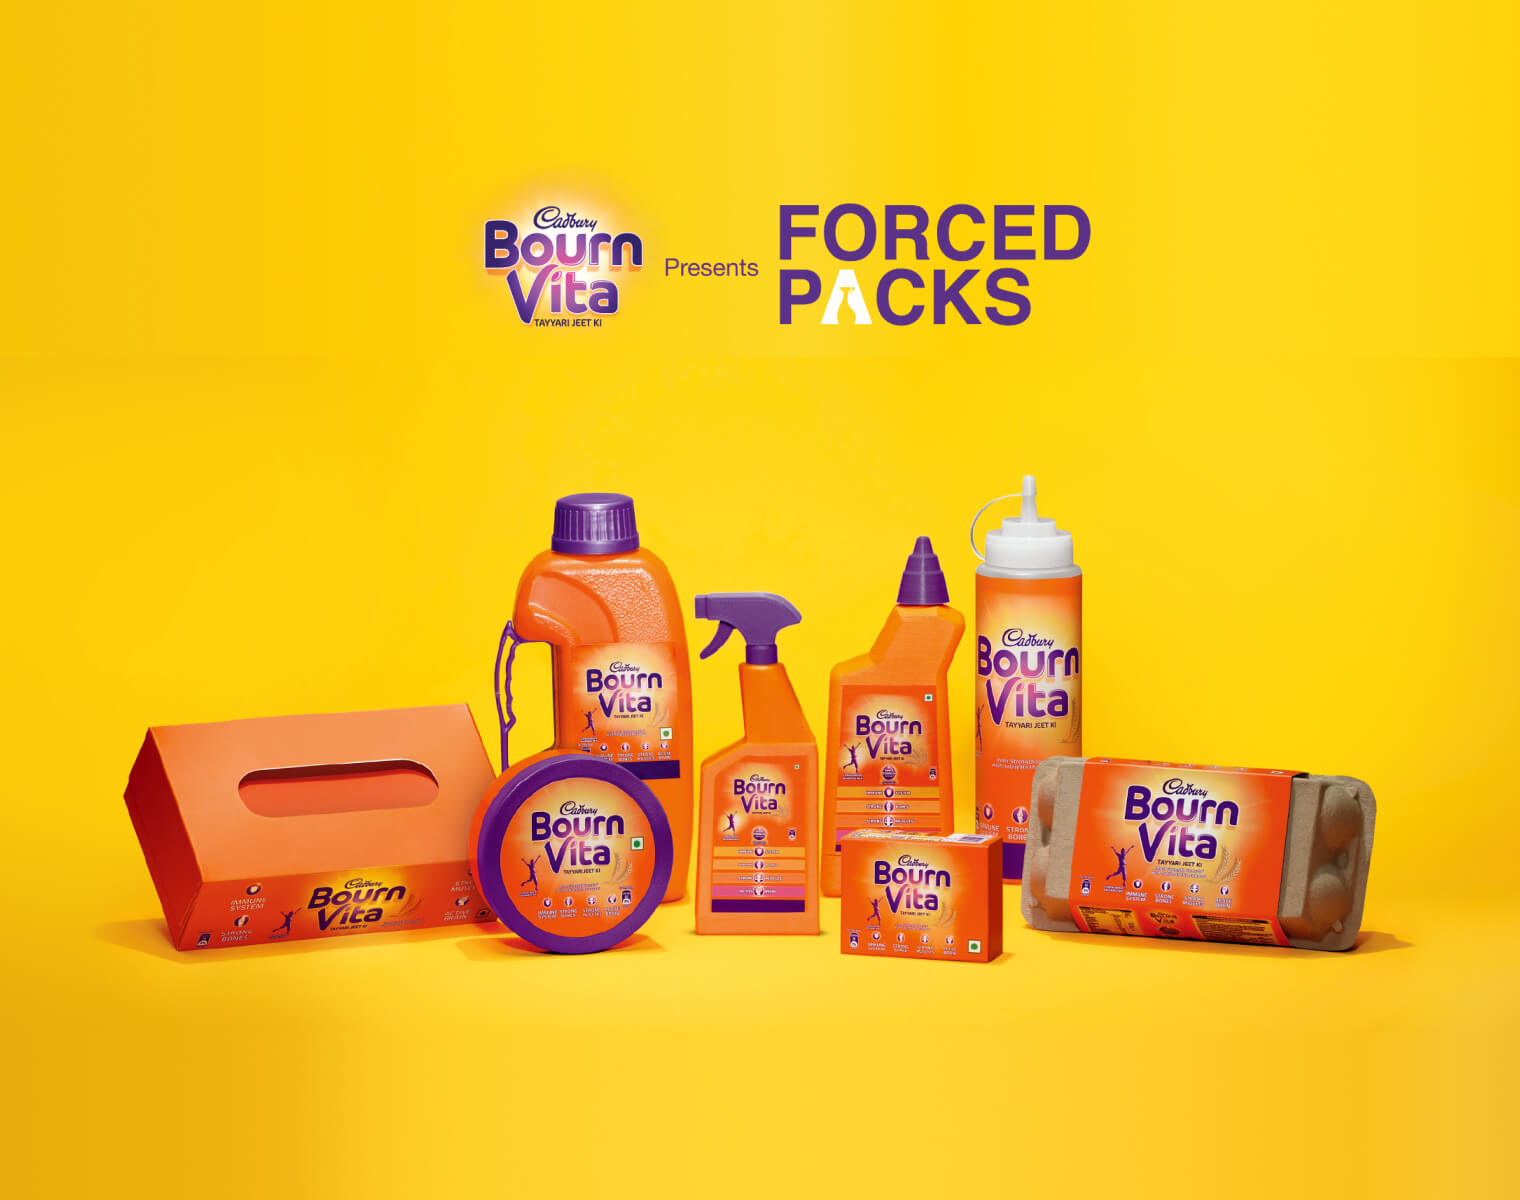 Cadbury Bournvita presents ‘Forced Packs’ | #FaithNotForce